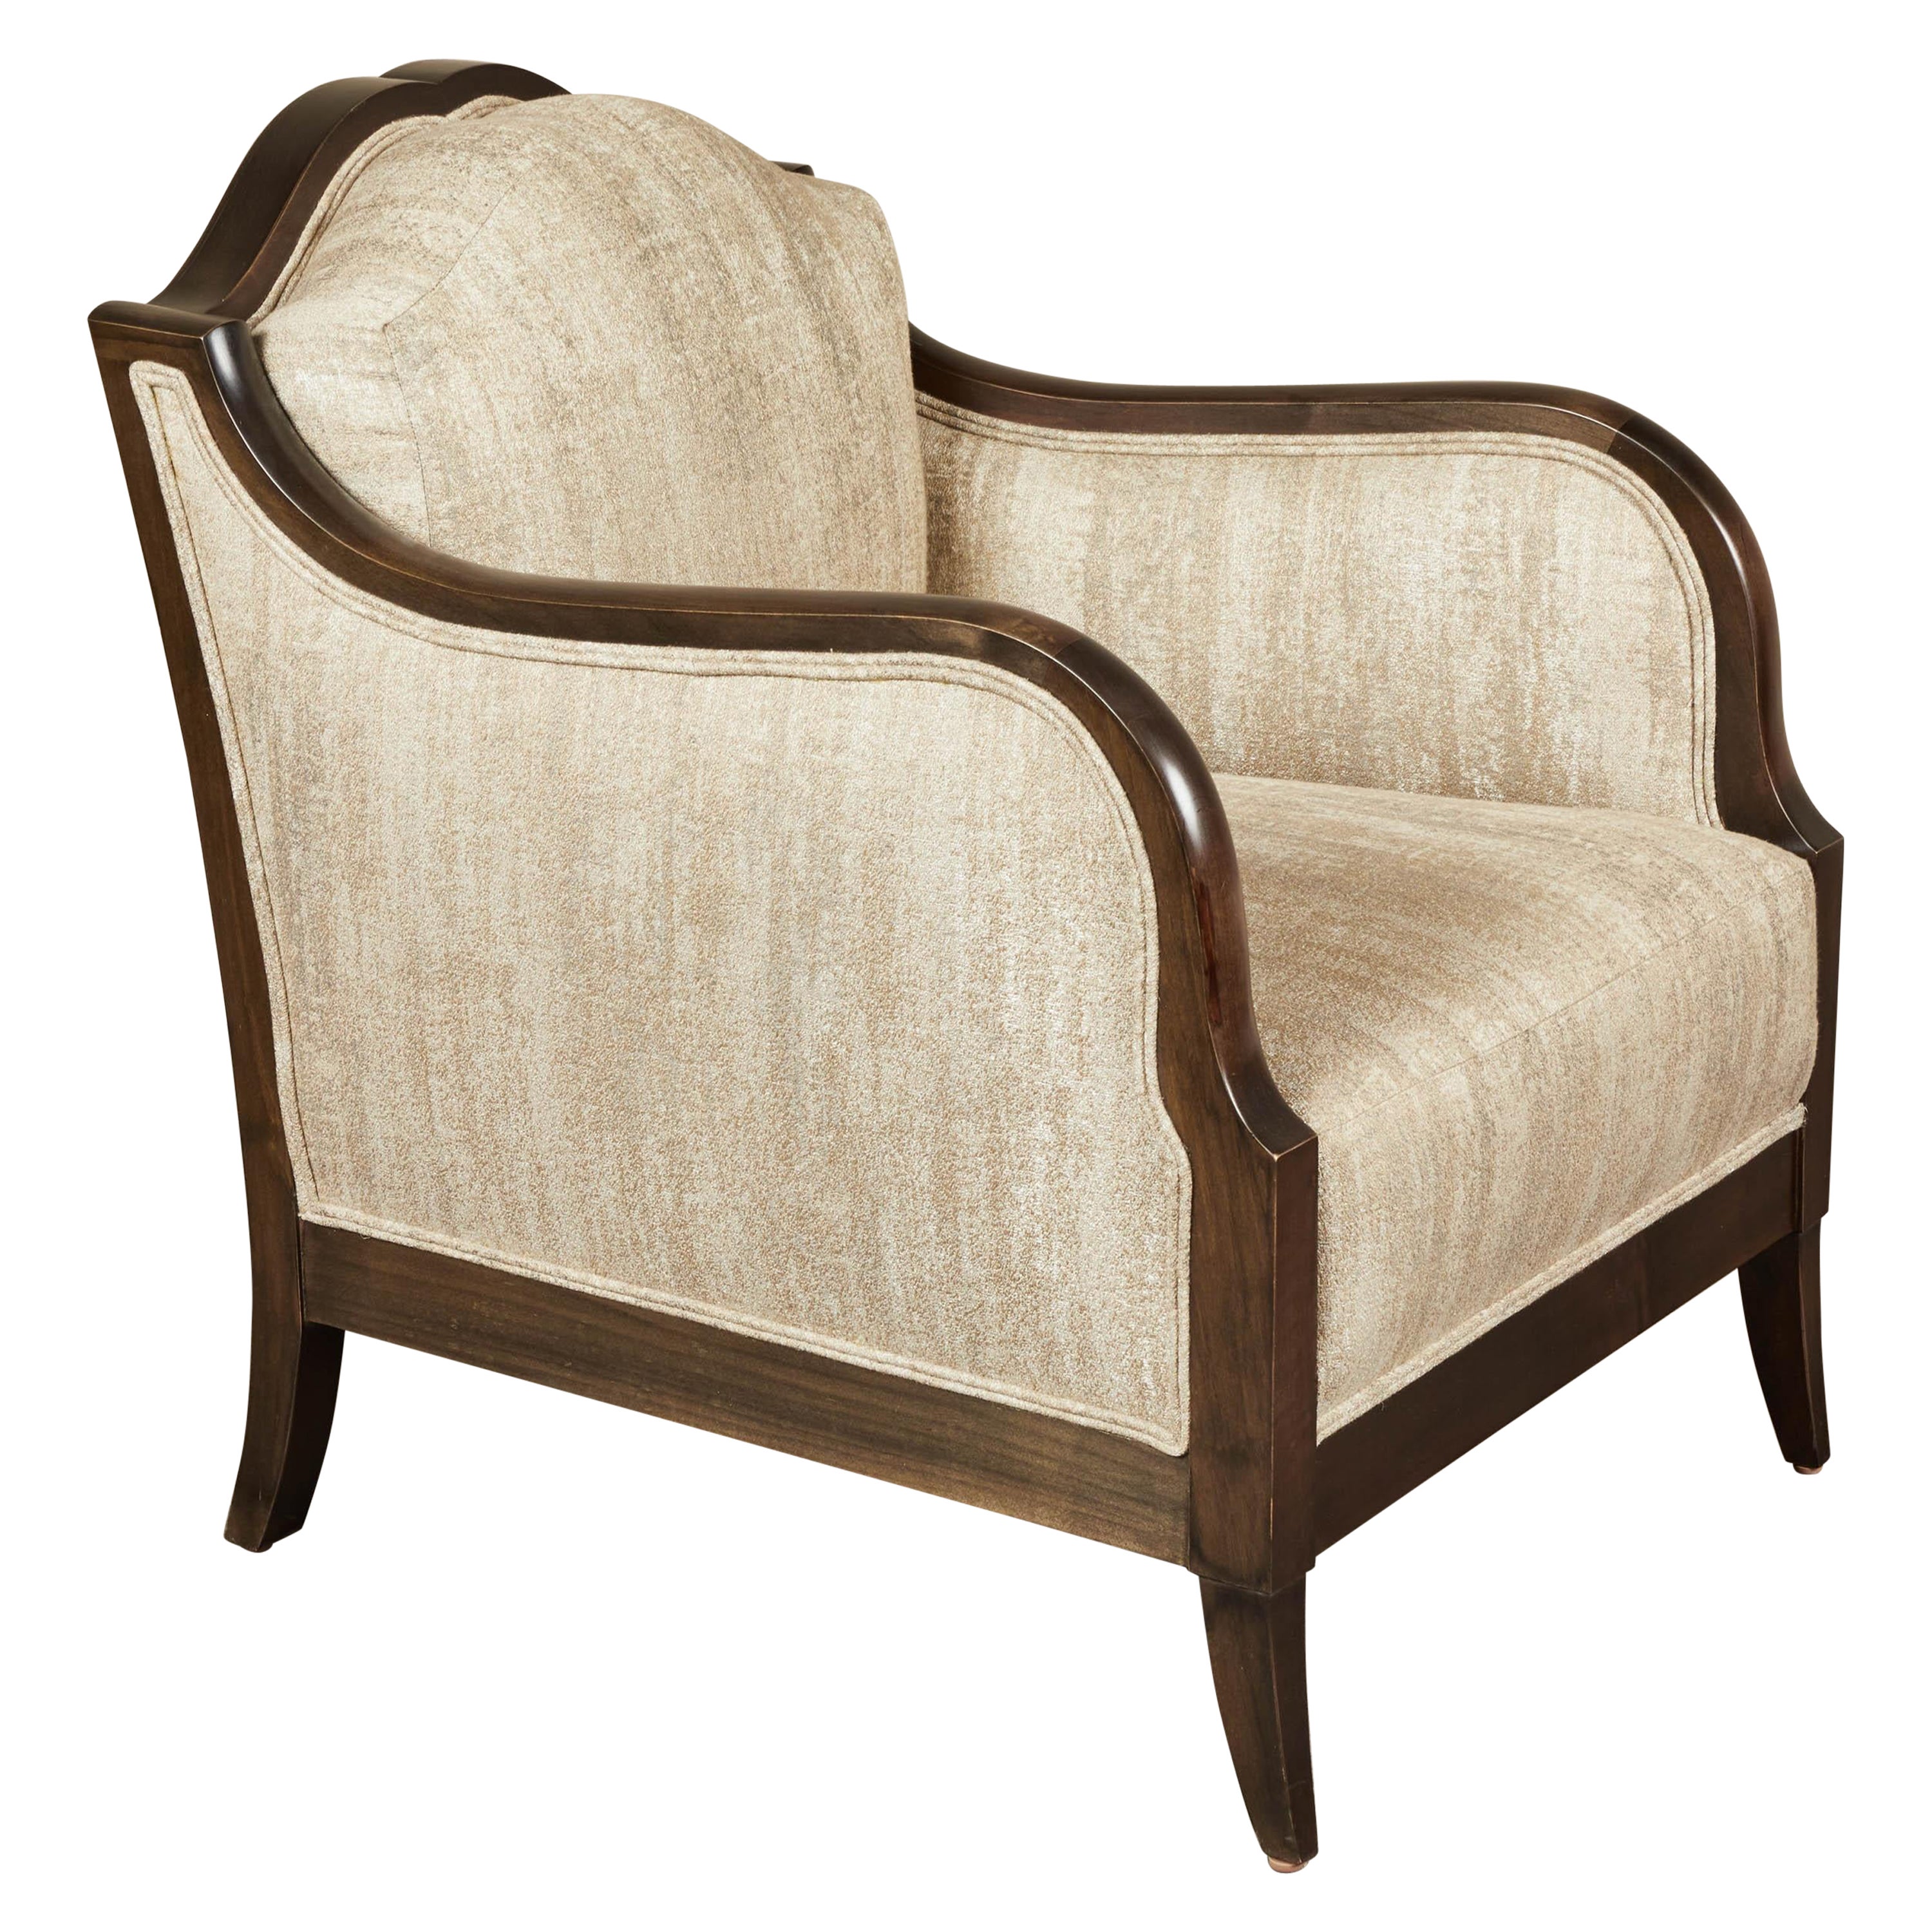 “Ingrid” Chair, Susanne Hollis Collection